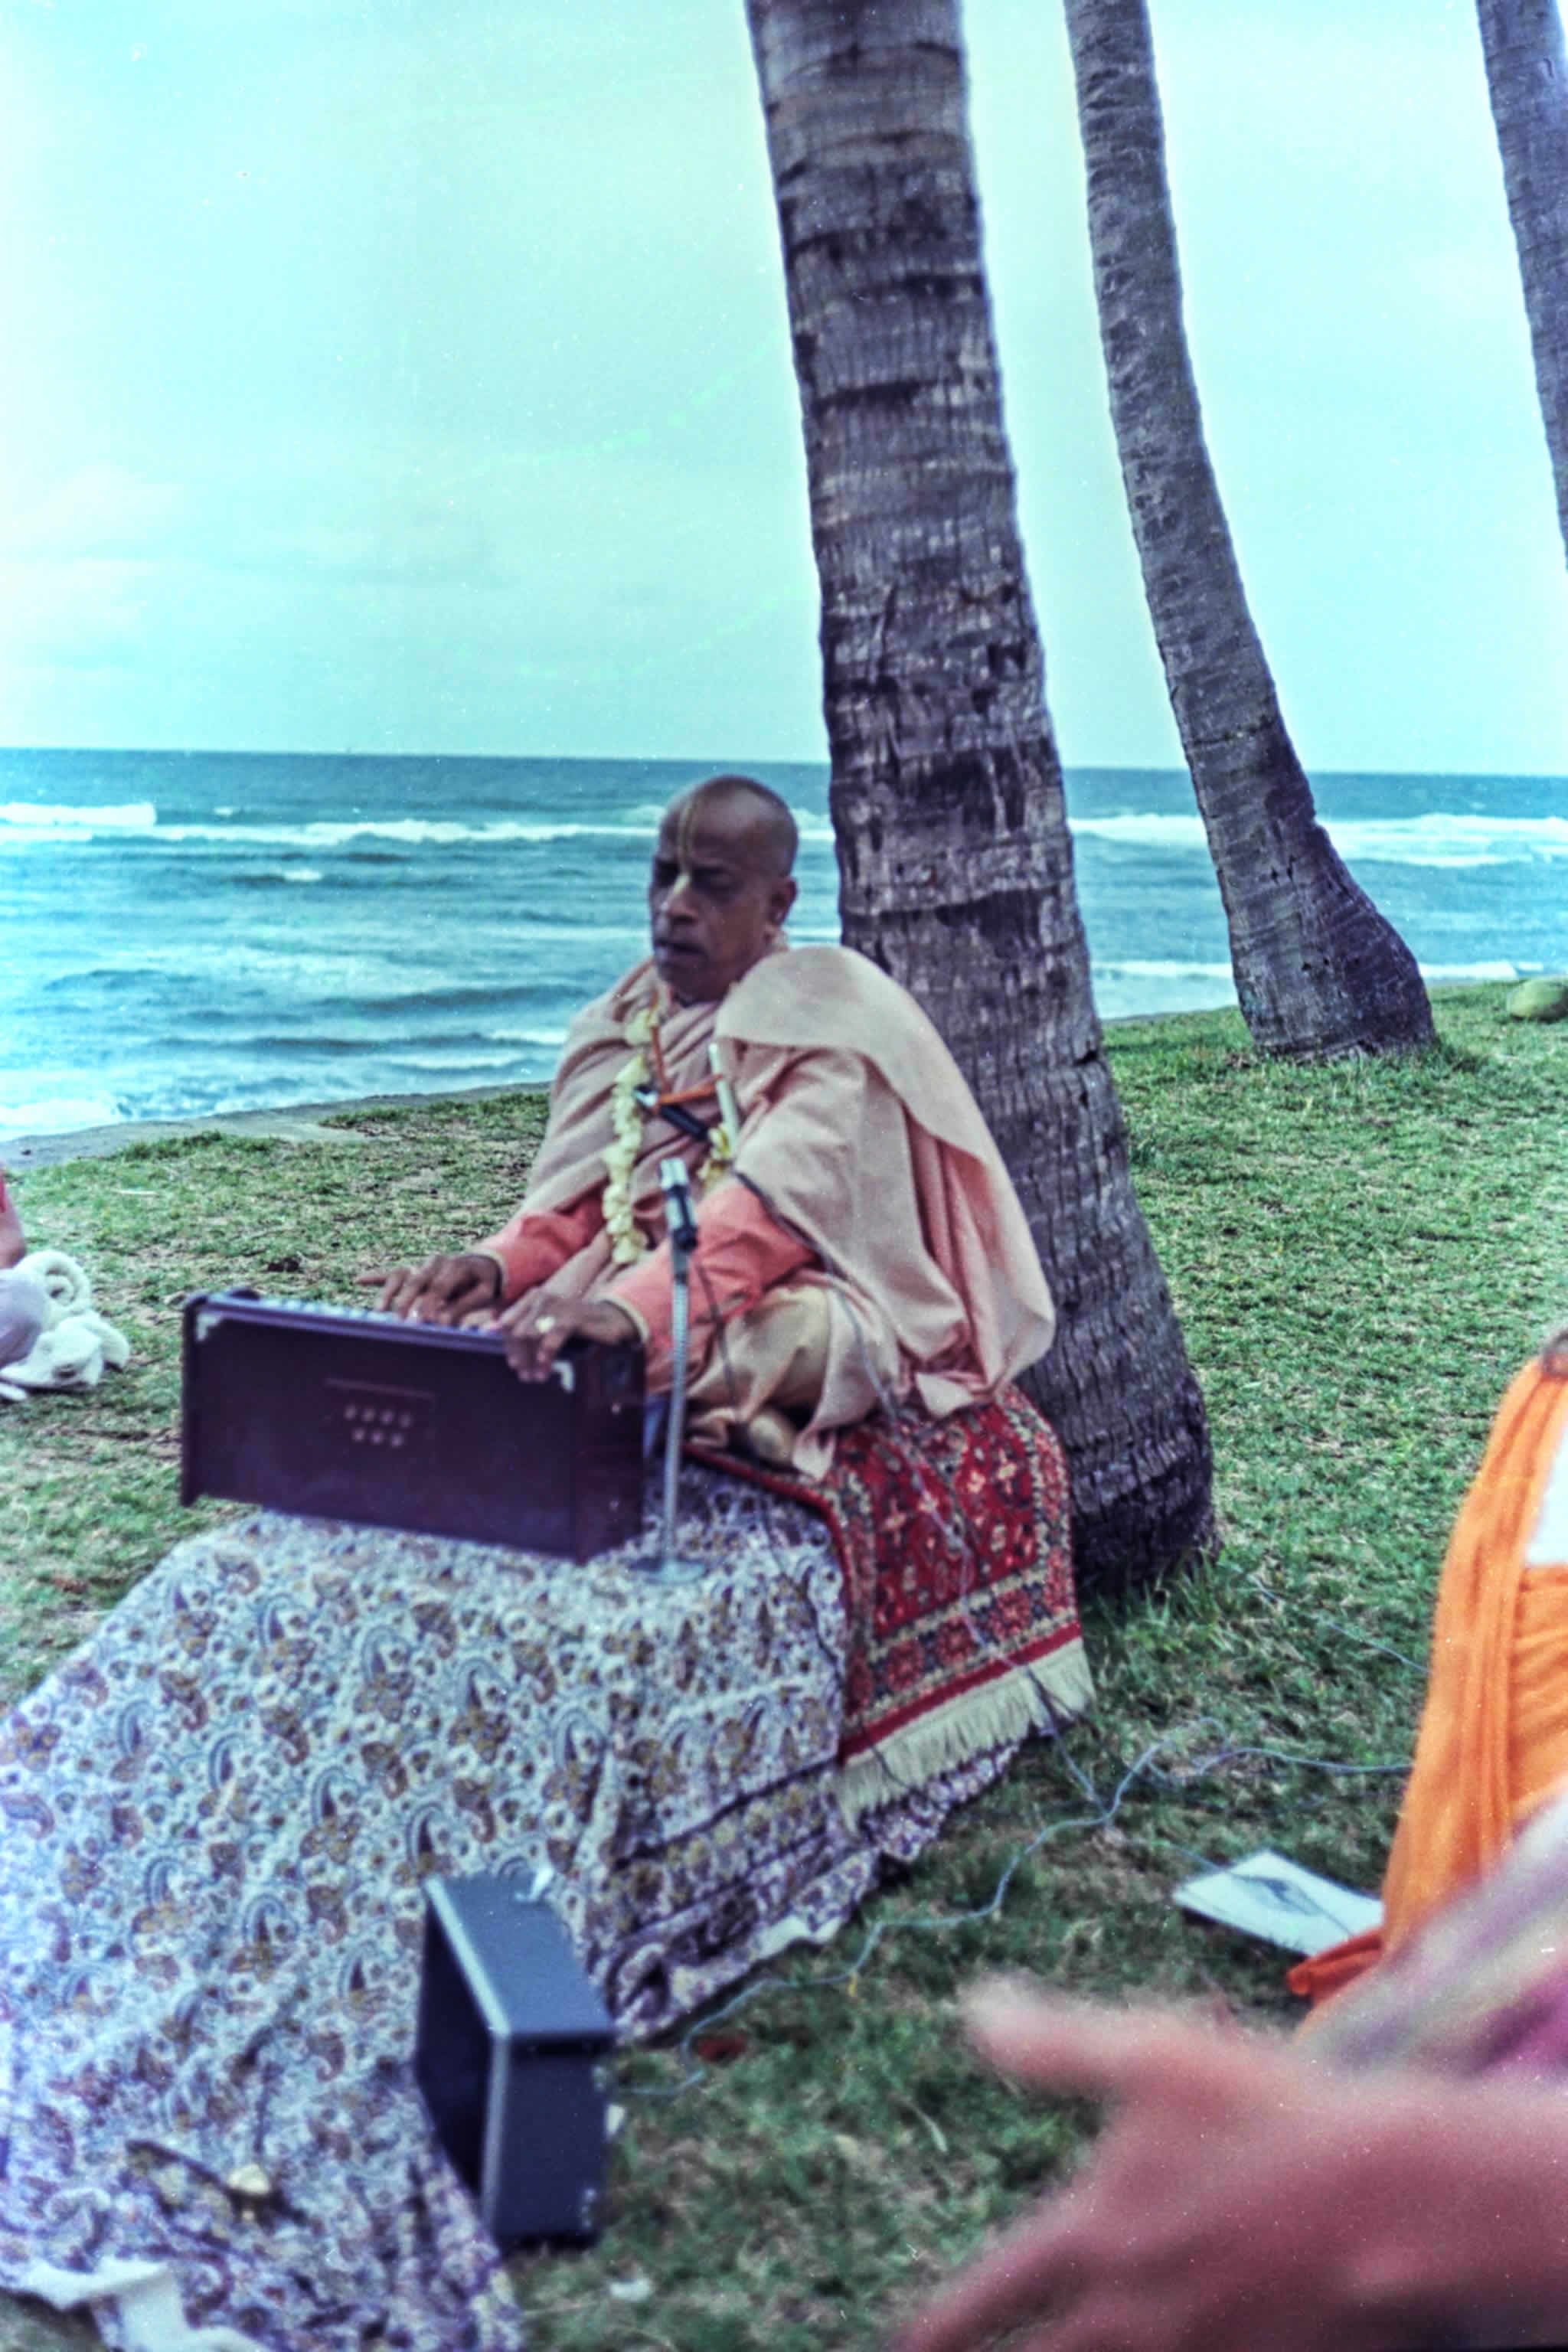 playing harmonium on the beach in hawaii